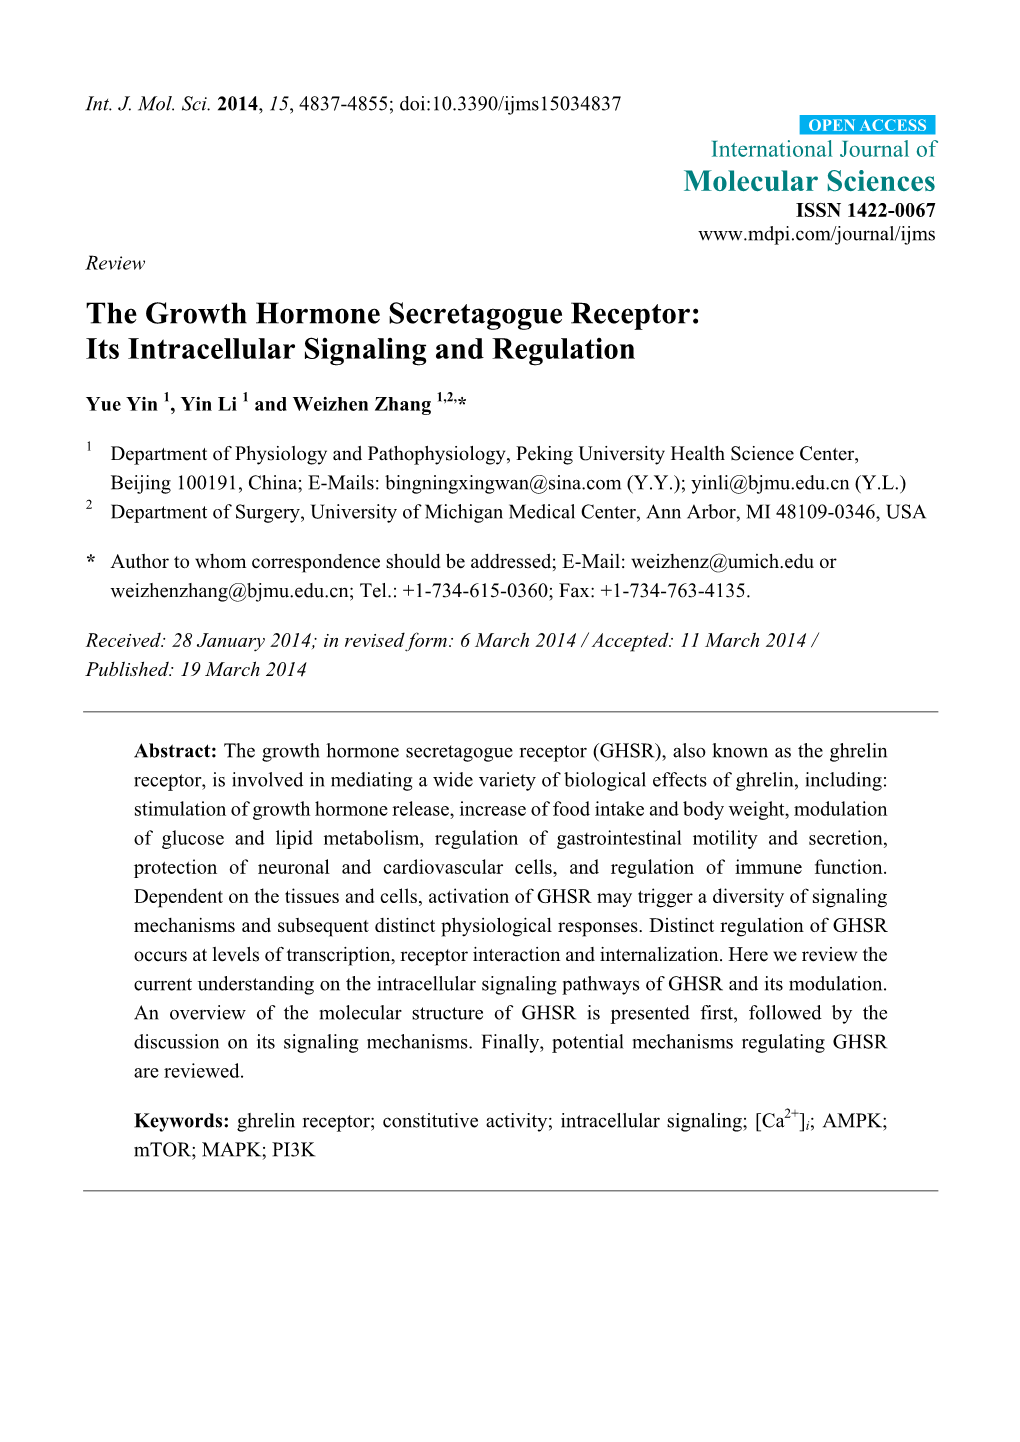 The Growth Hormone Secretagogue Receptor: Its Intracellular Signaling and Regulation